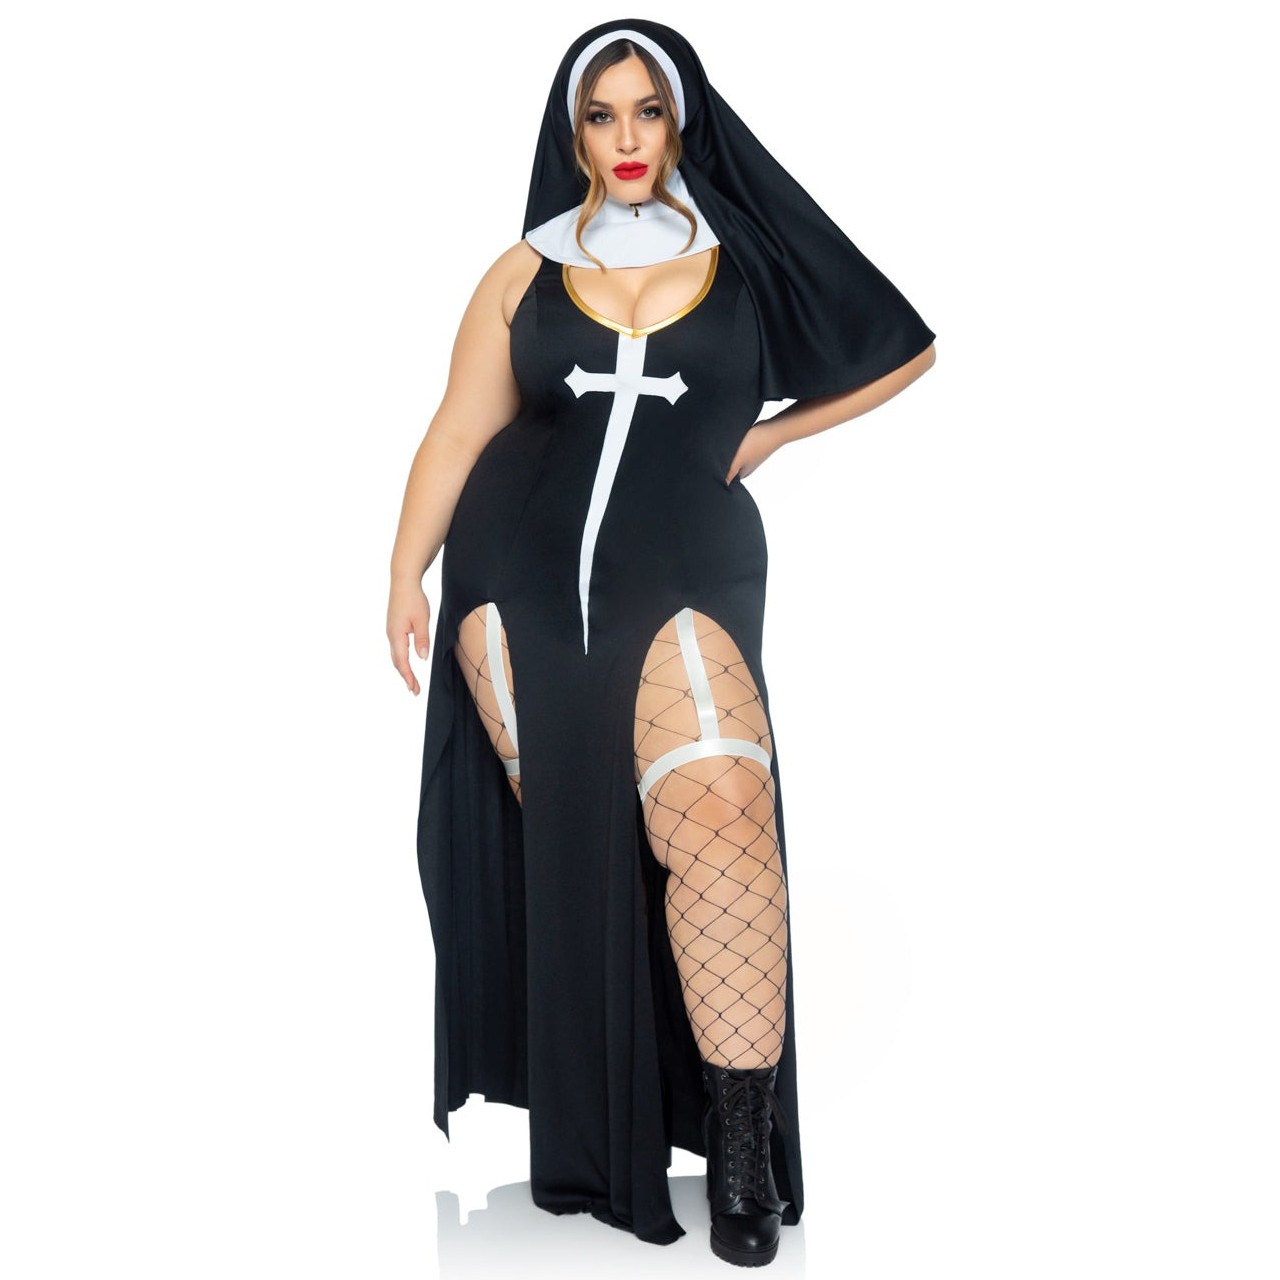 Костюм на Хэллоуин знойной грешницы-монахини, Plus Size.